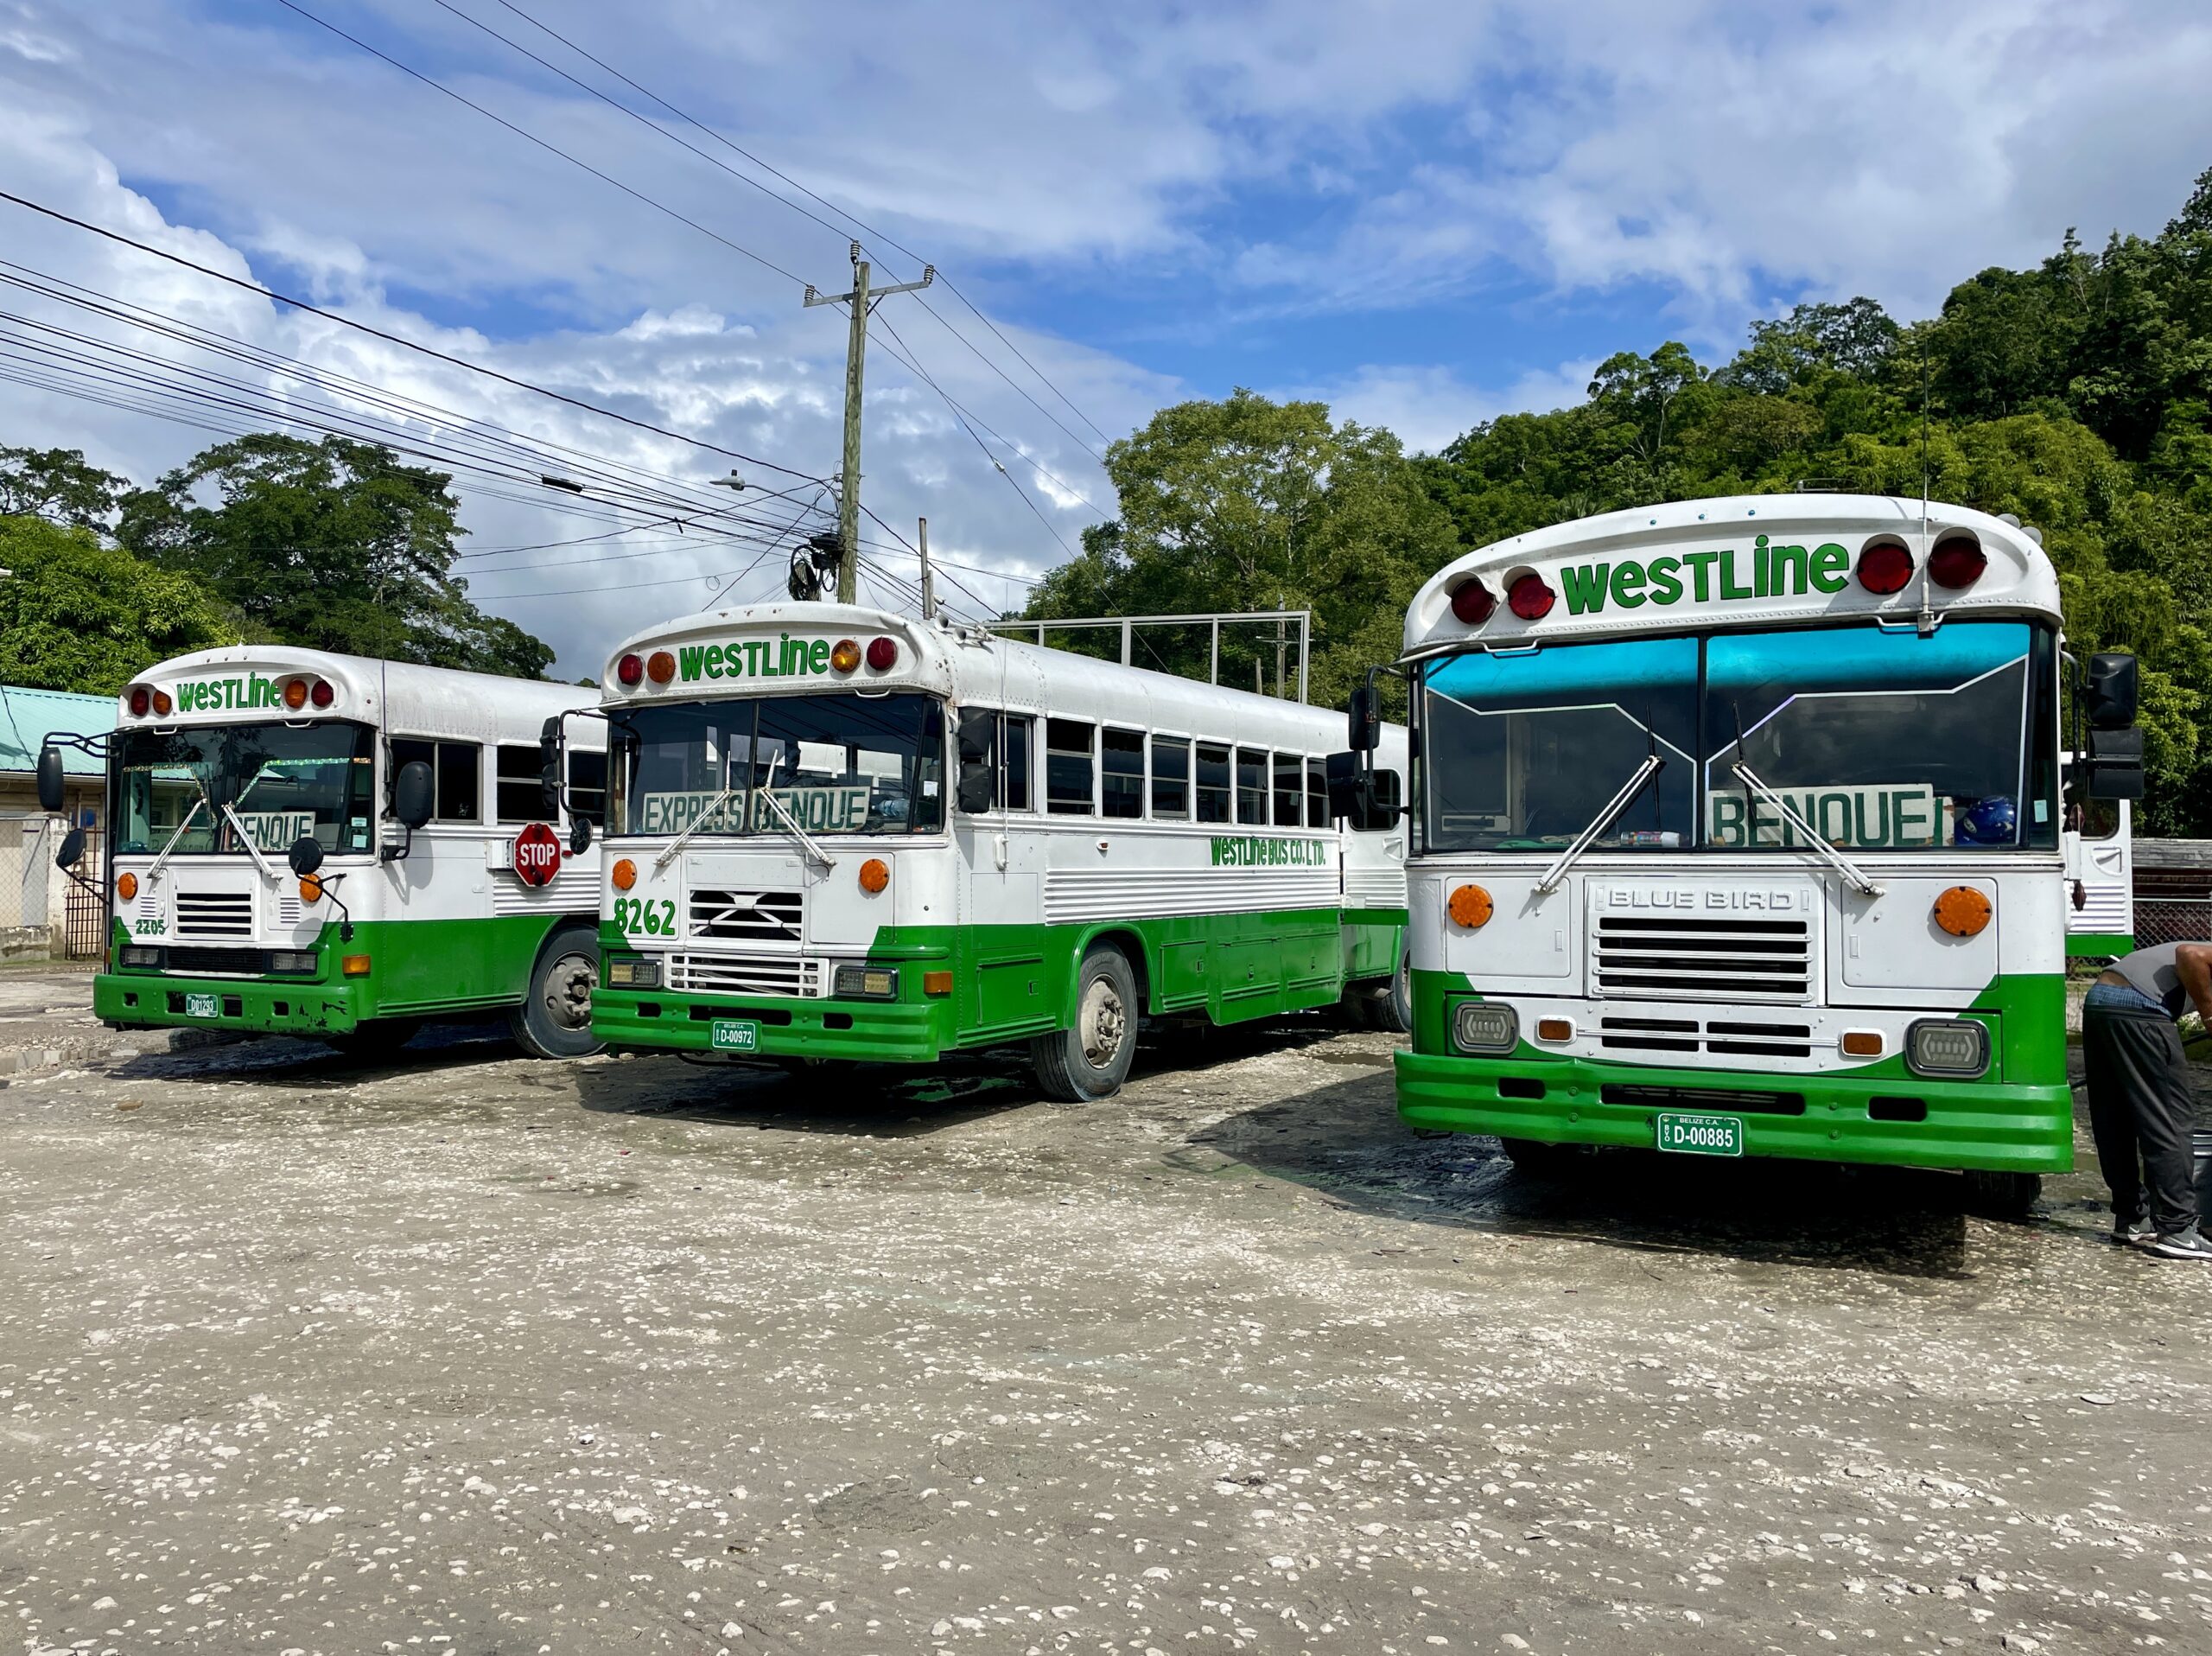 Backpacker’s Guide to Public Transportation in Belize